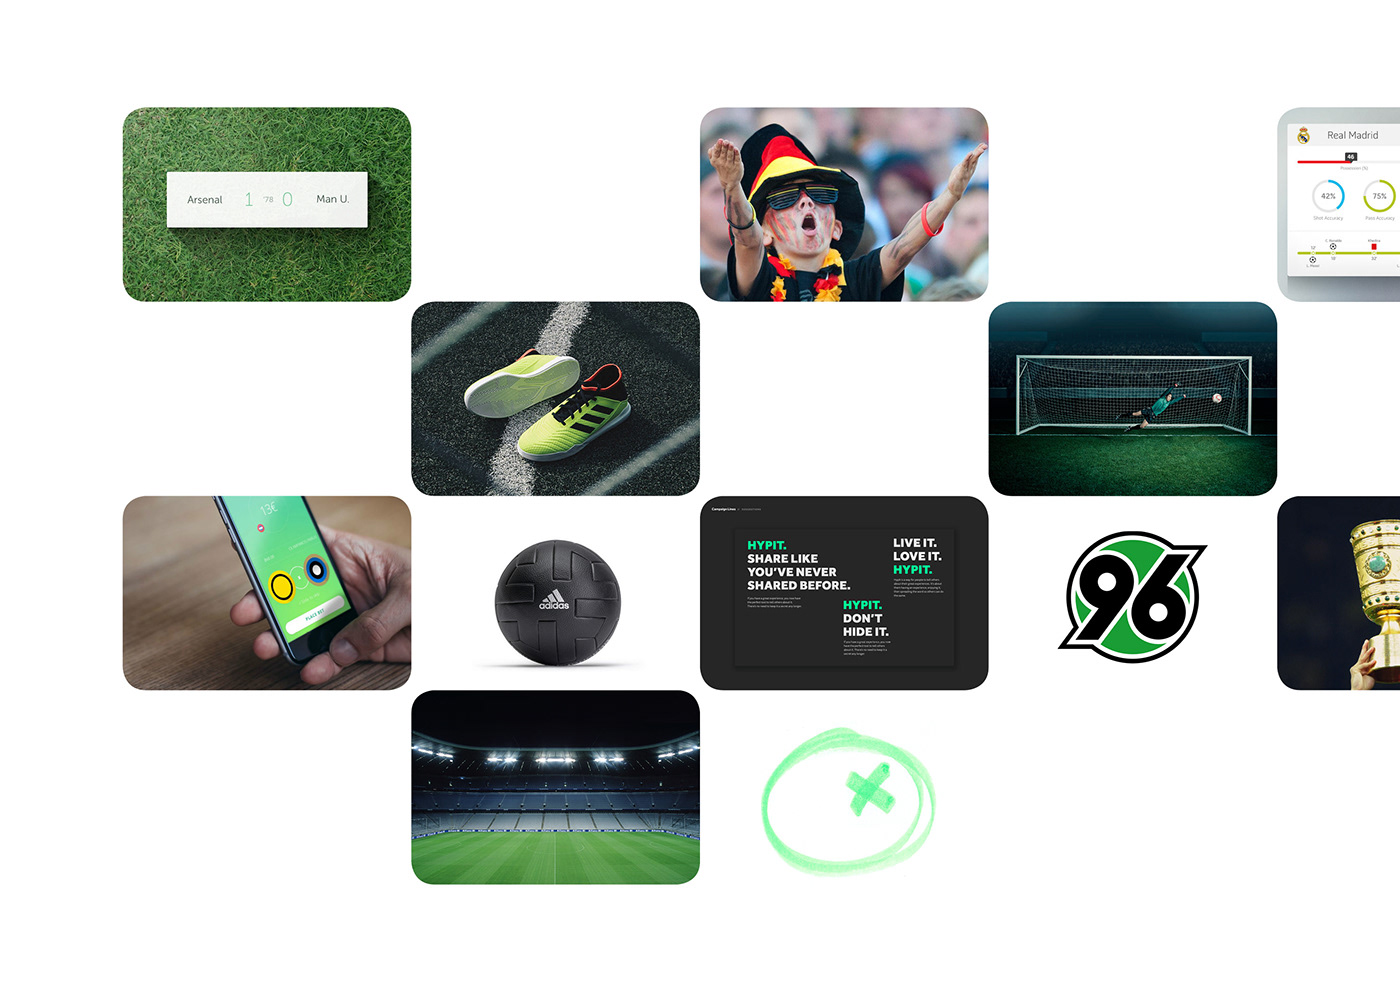 app logo soccer sports gambling branding  germany